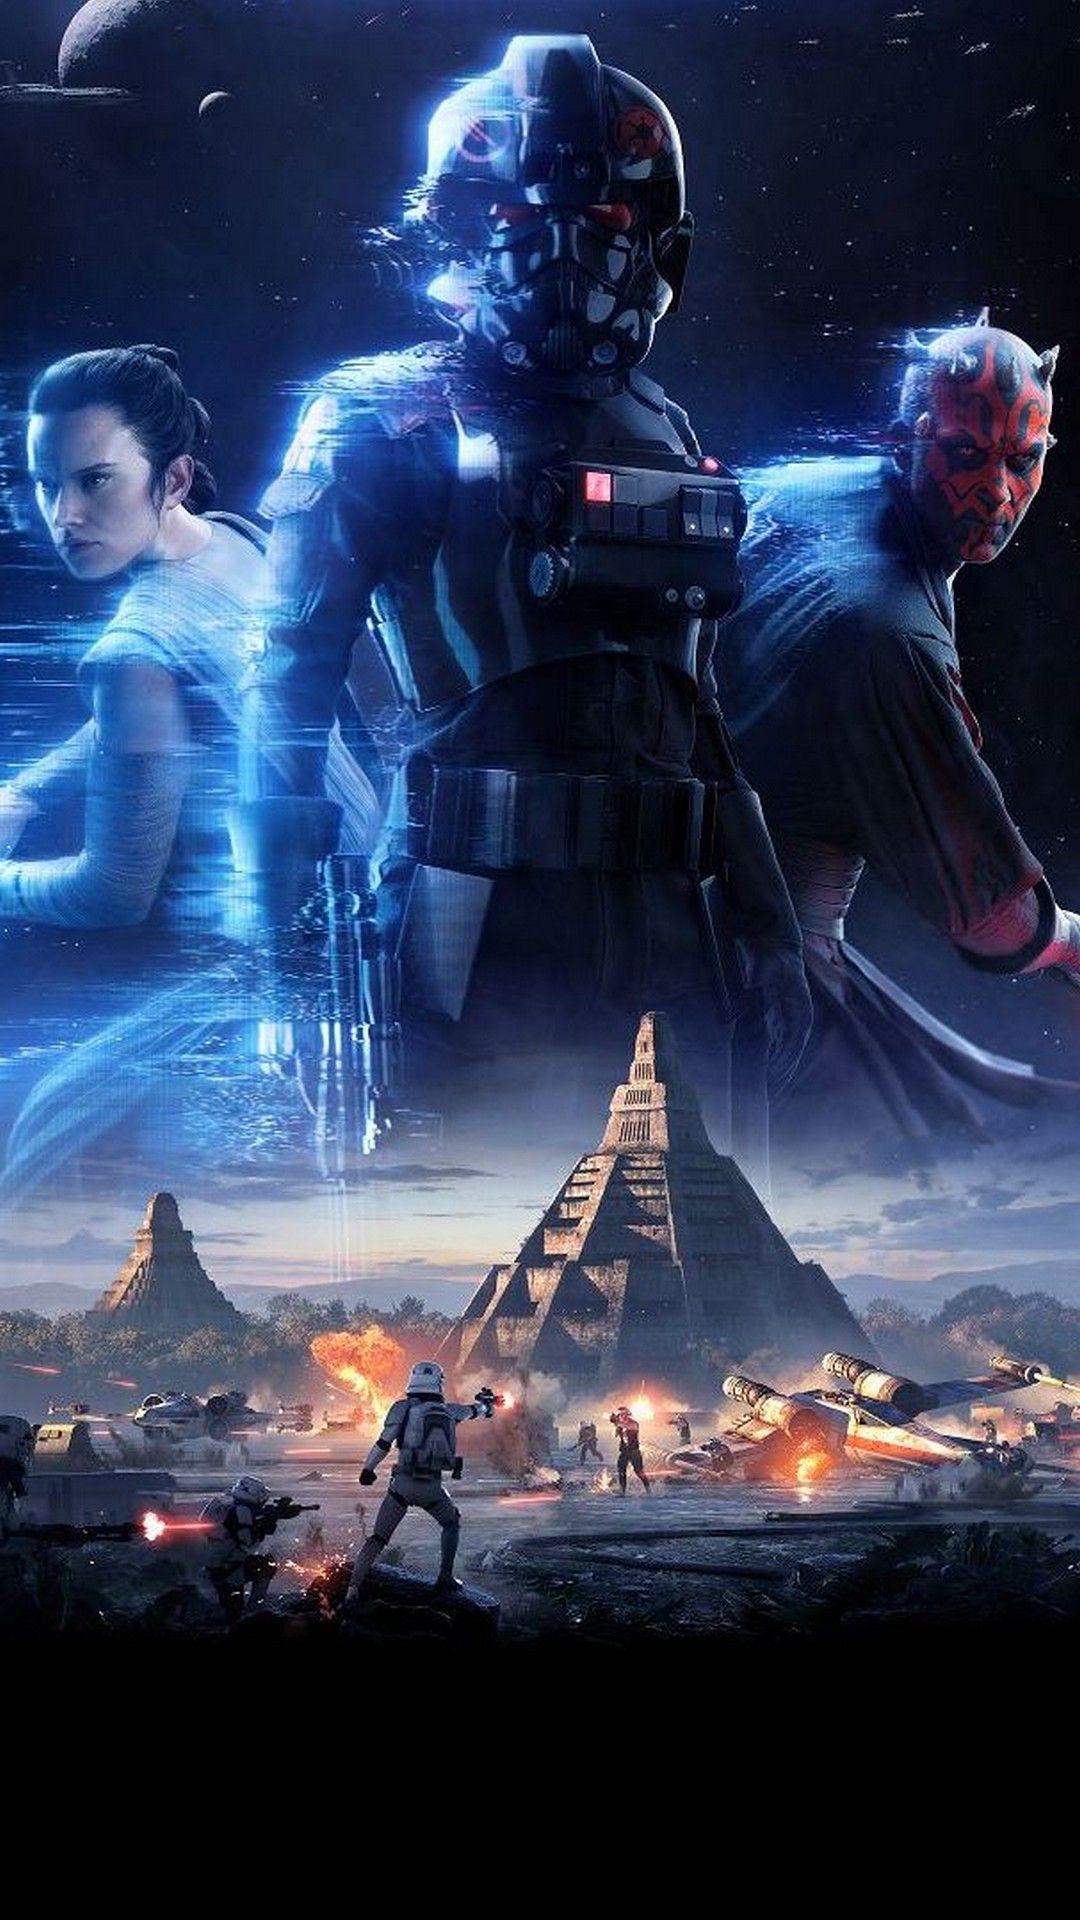 Star Wars Battlefront 2 Games iPhone Wallpaper. Star wars